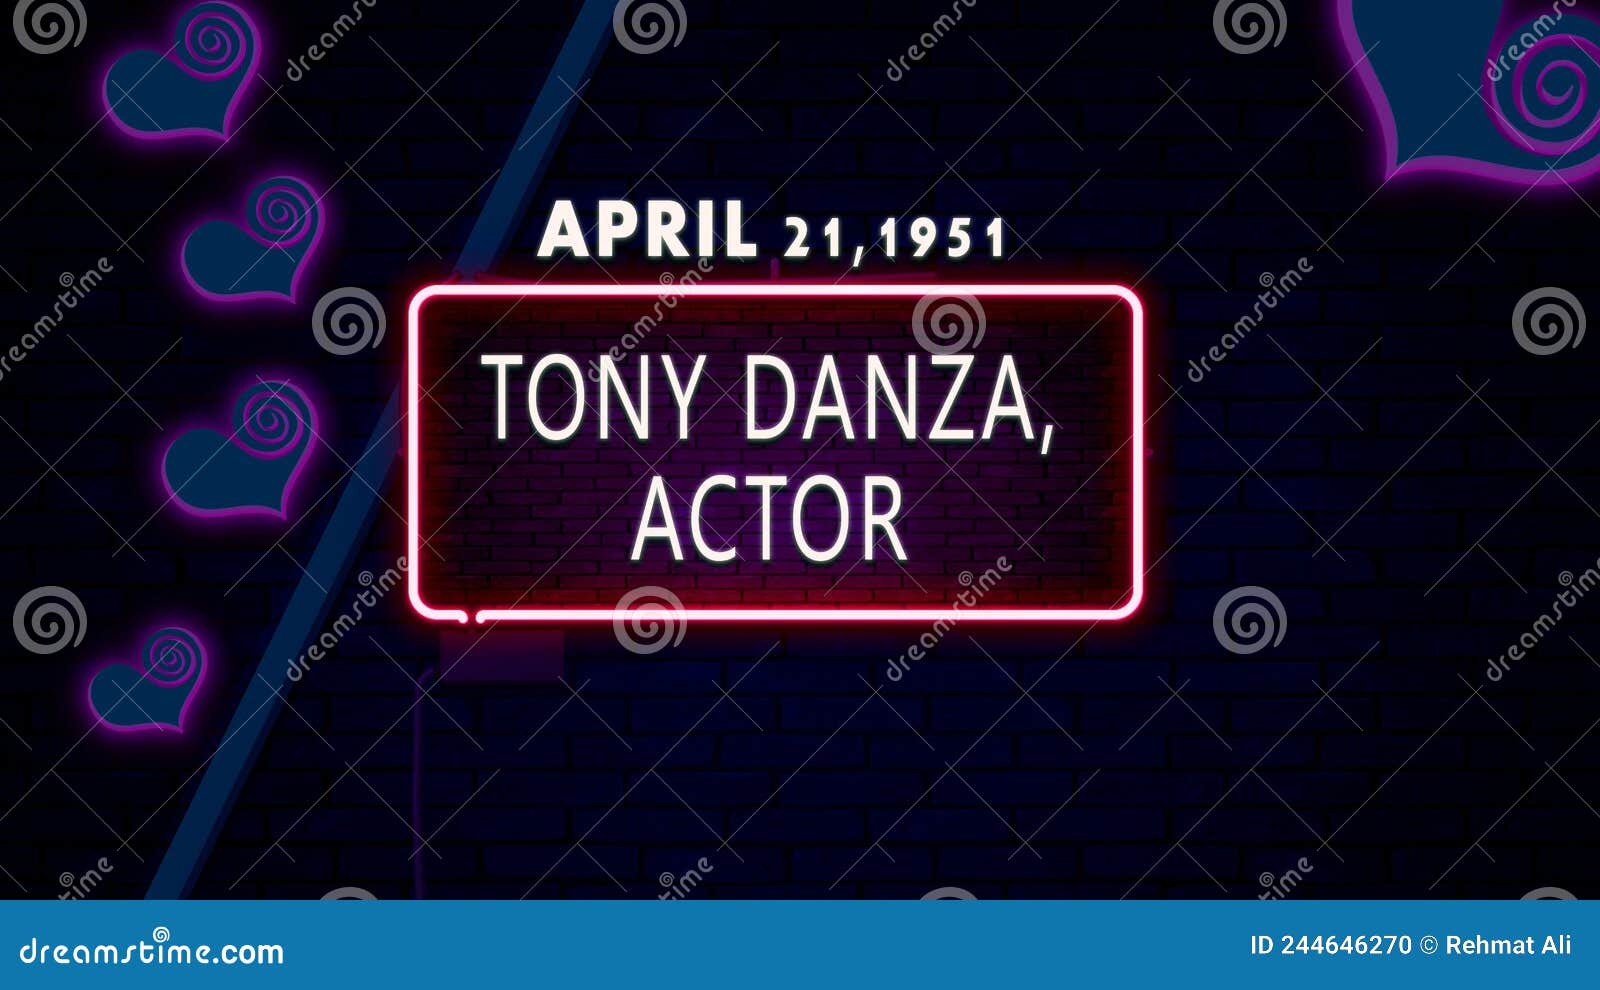 april 21, 1951 - tony danza, actor, brithday noen text effect on bricks background